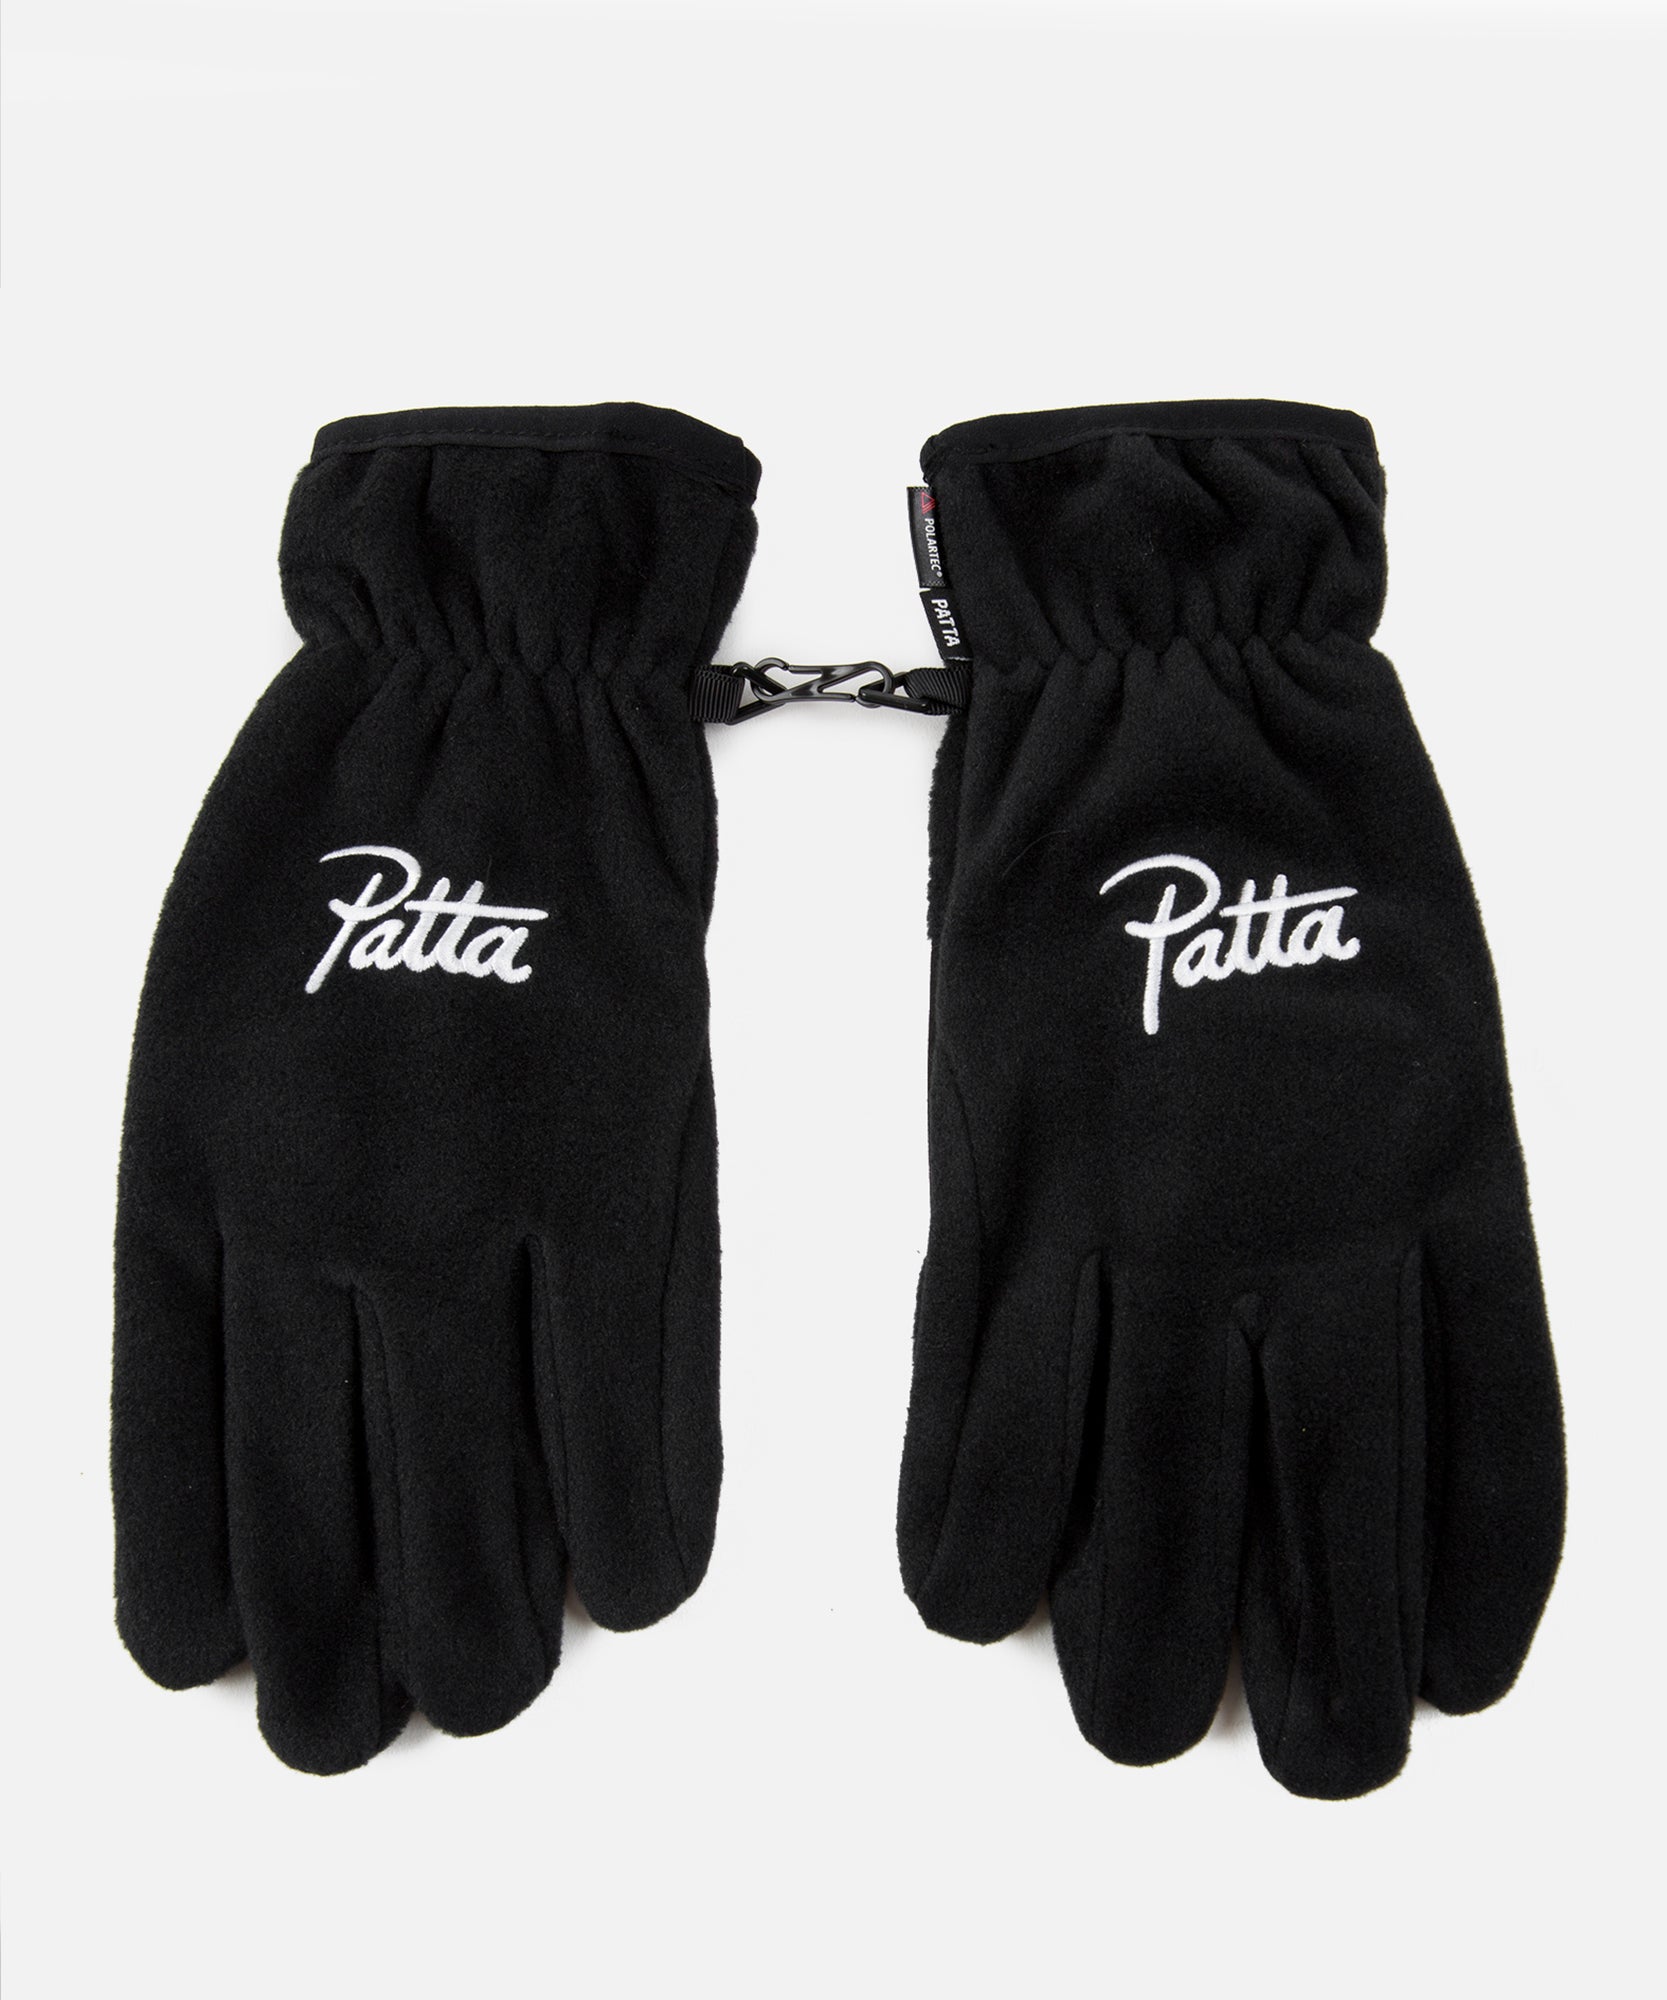 Patta Polartec Gloves (Black/Black)